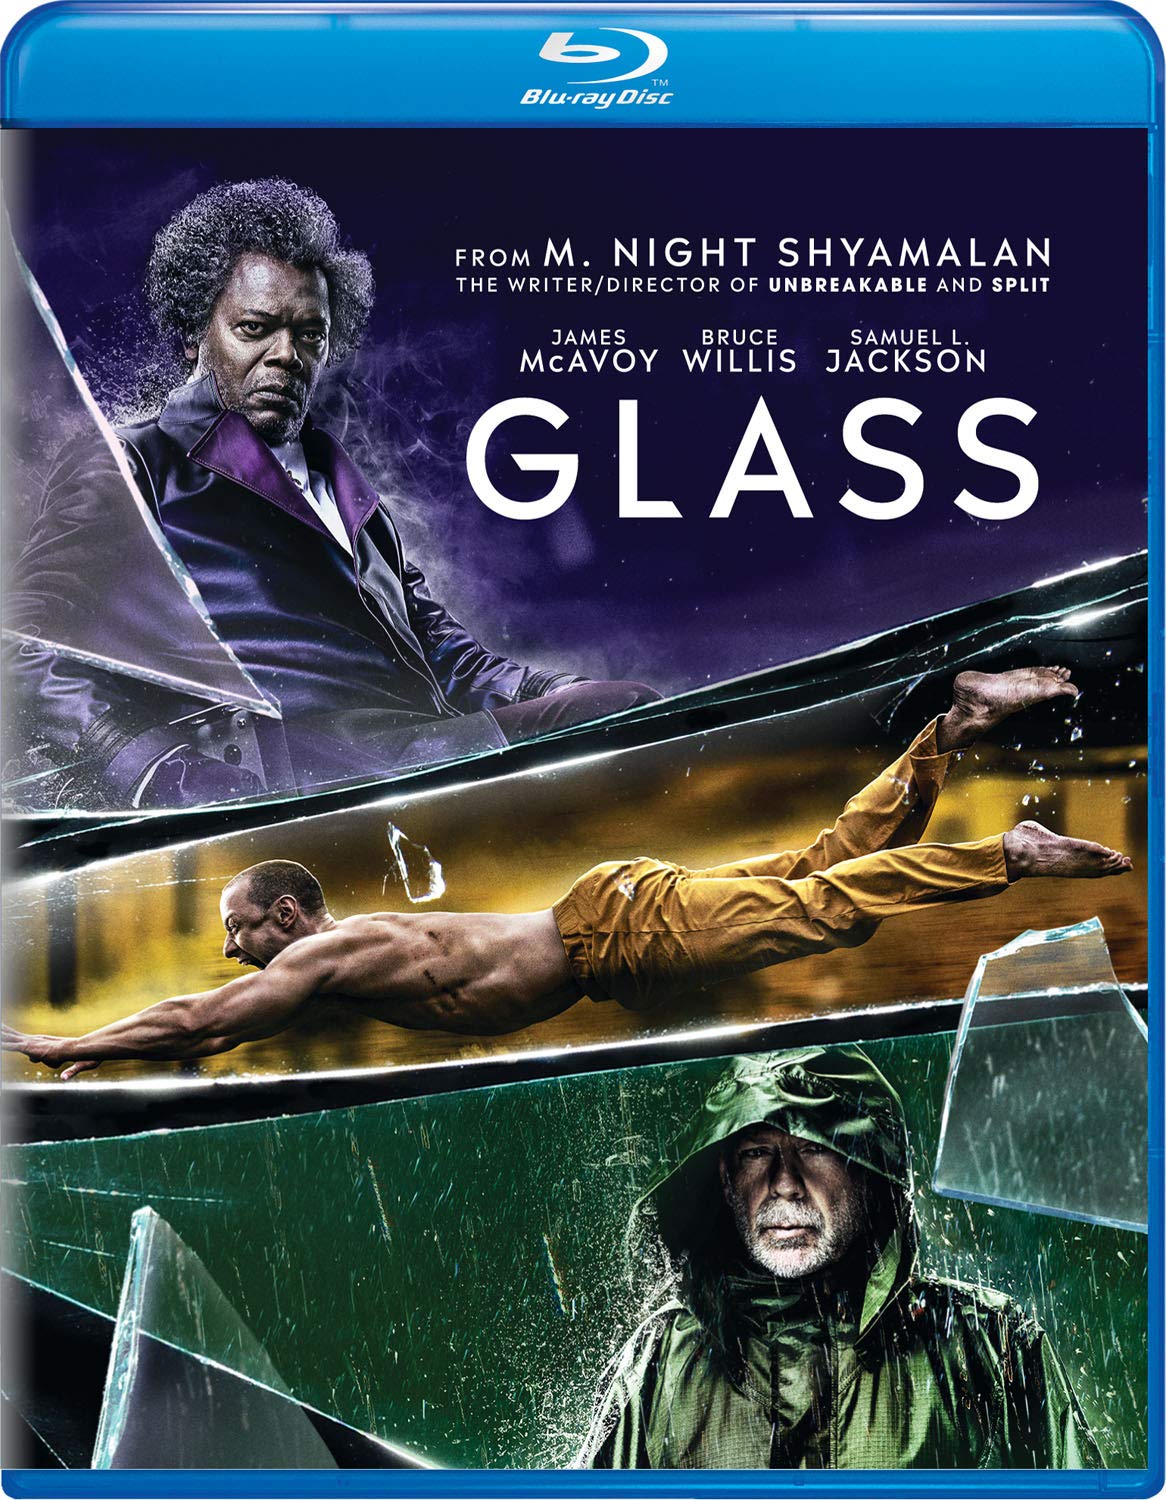 Glass (Blu-ray New Box Art) - Blu-ray [ 2019 ]  - Thriller Movies On Blu-ray - Movies On GRUV